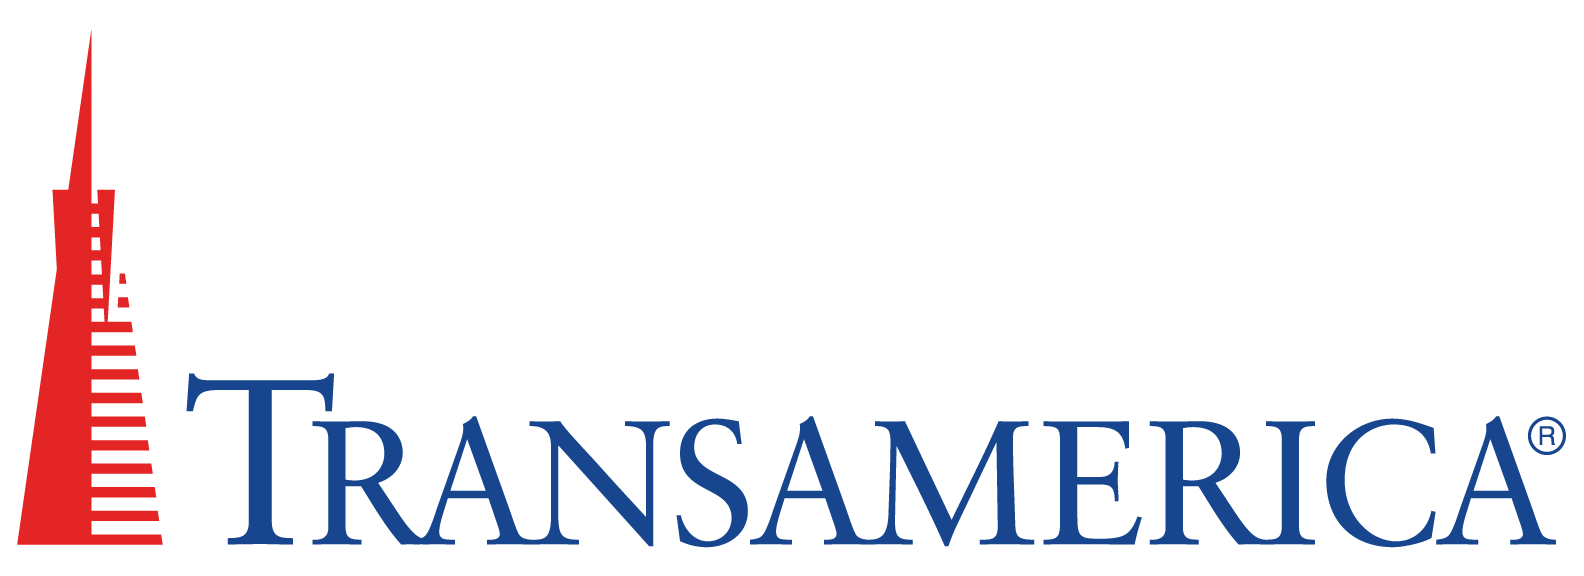 Transamerica-Logo